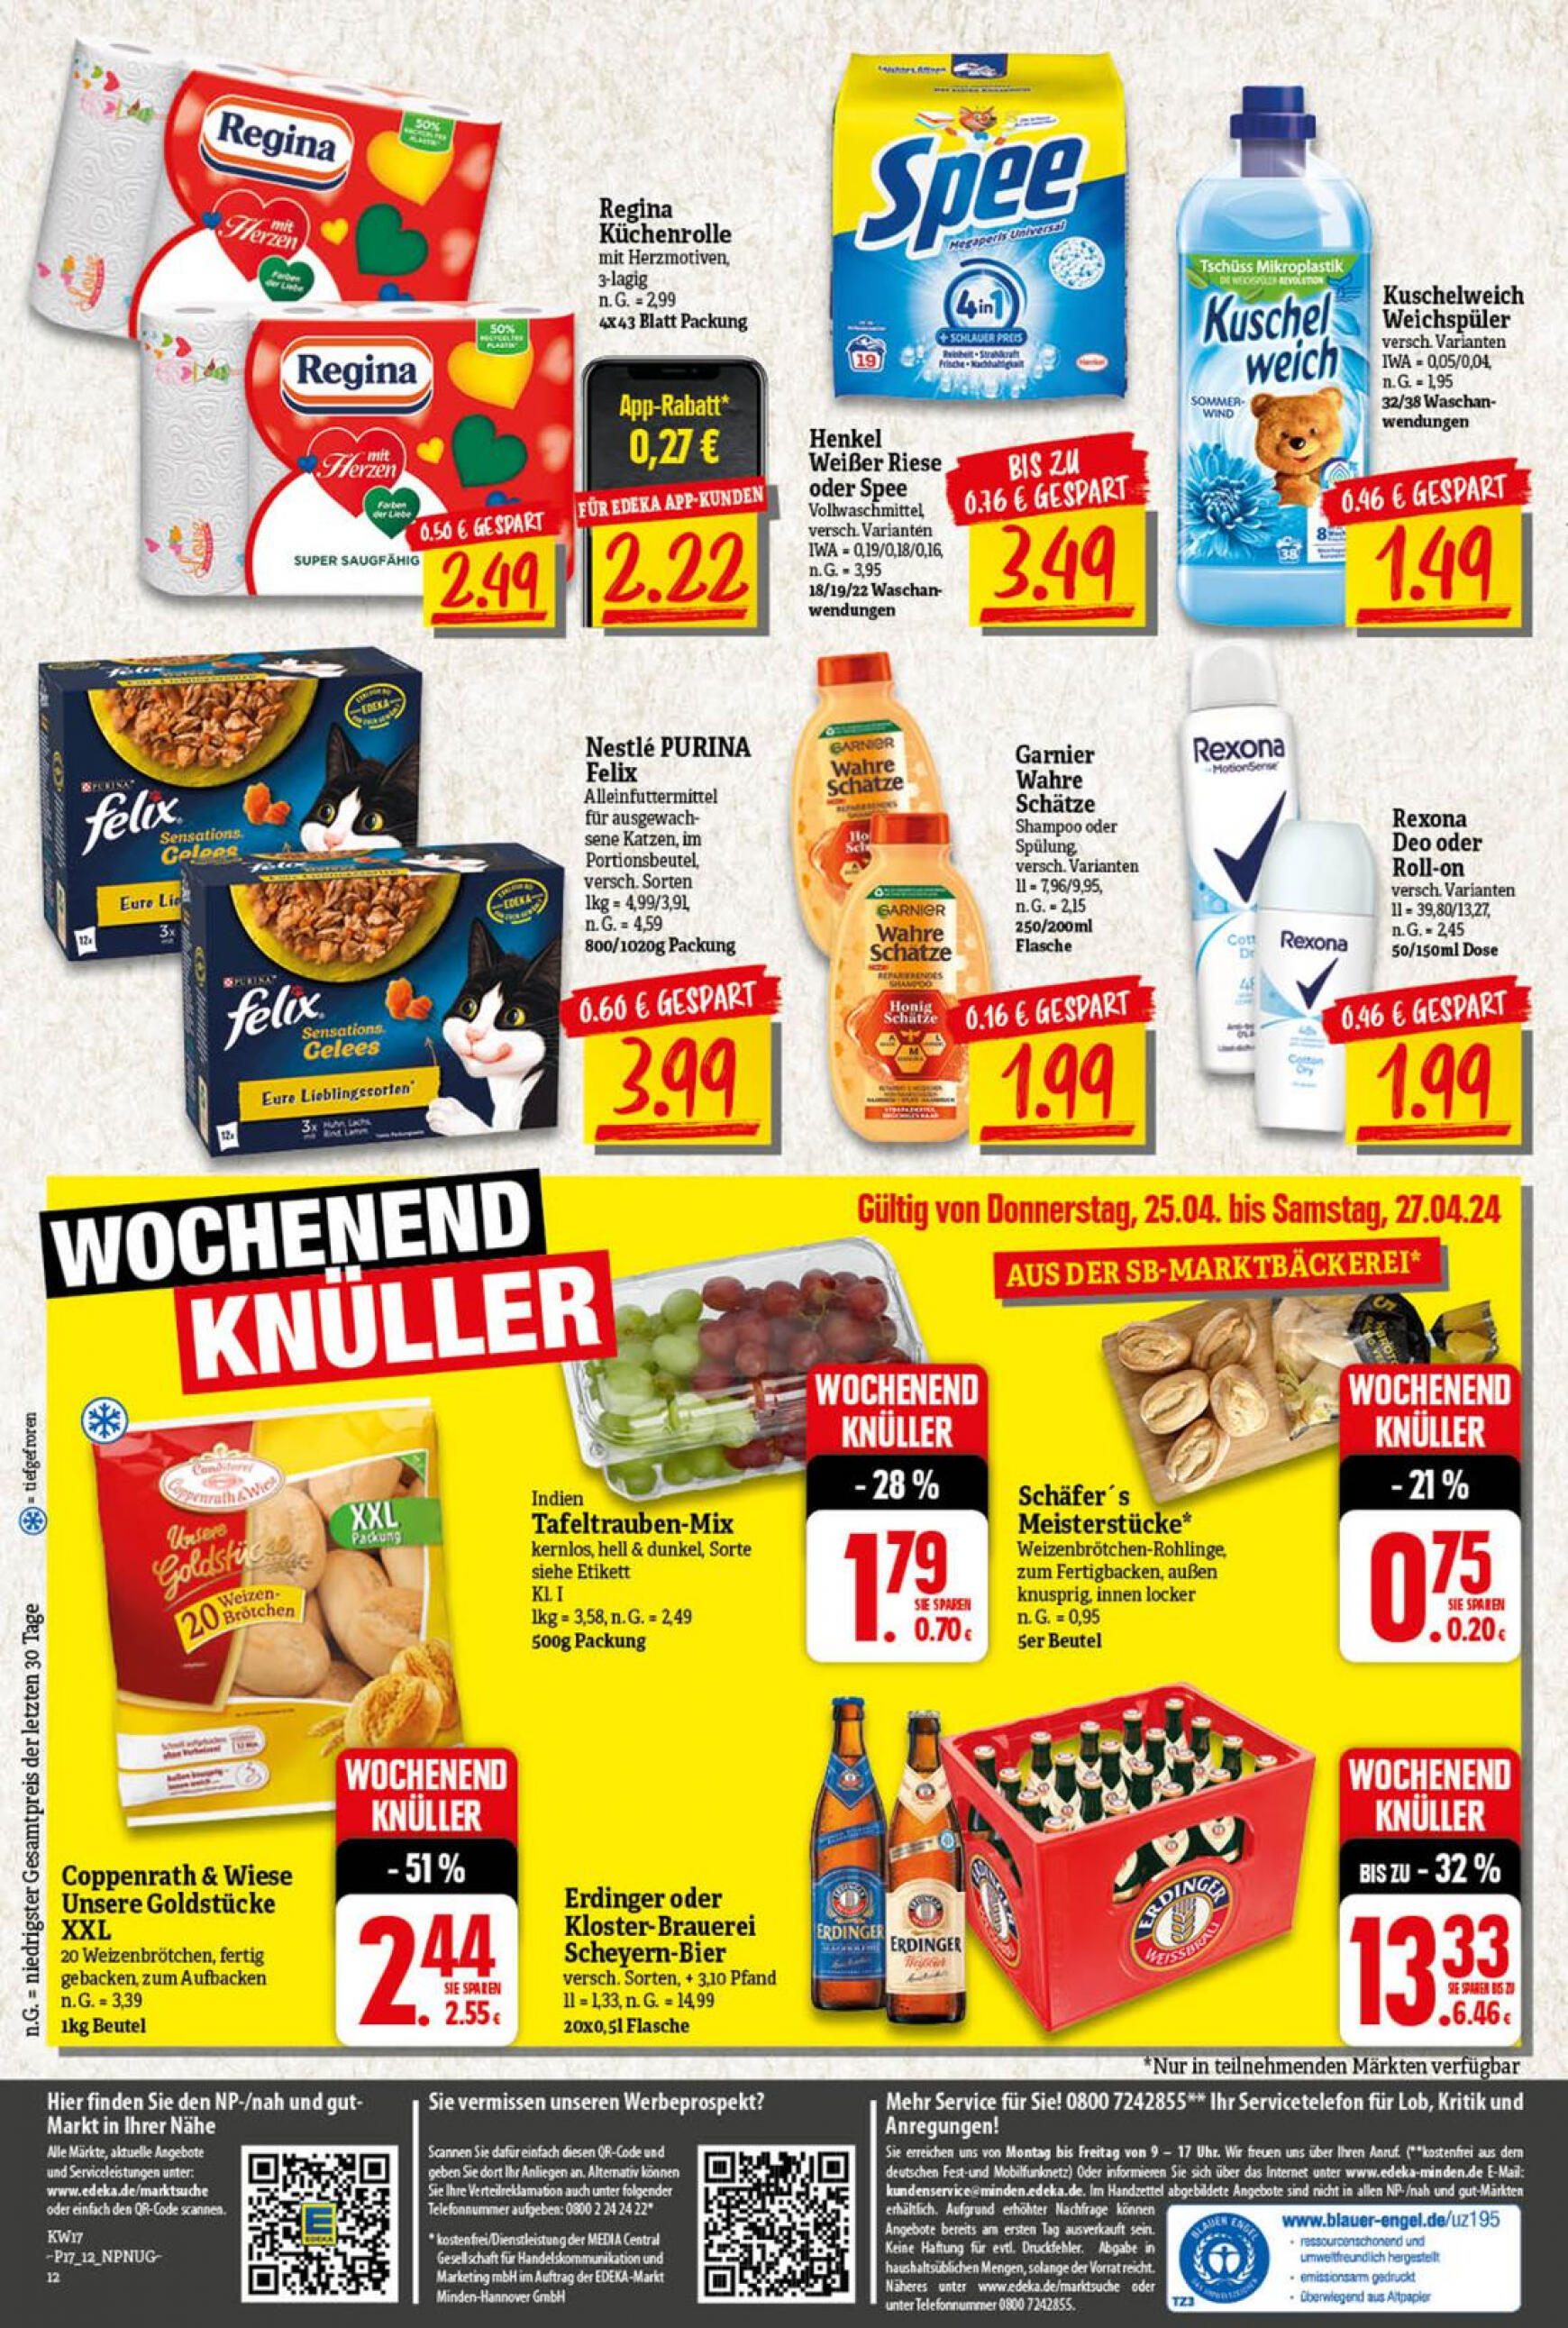 np - Flyer NP - Edeka aktuell 22.04. - 27.04. - page: 12